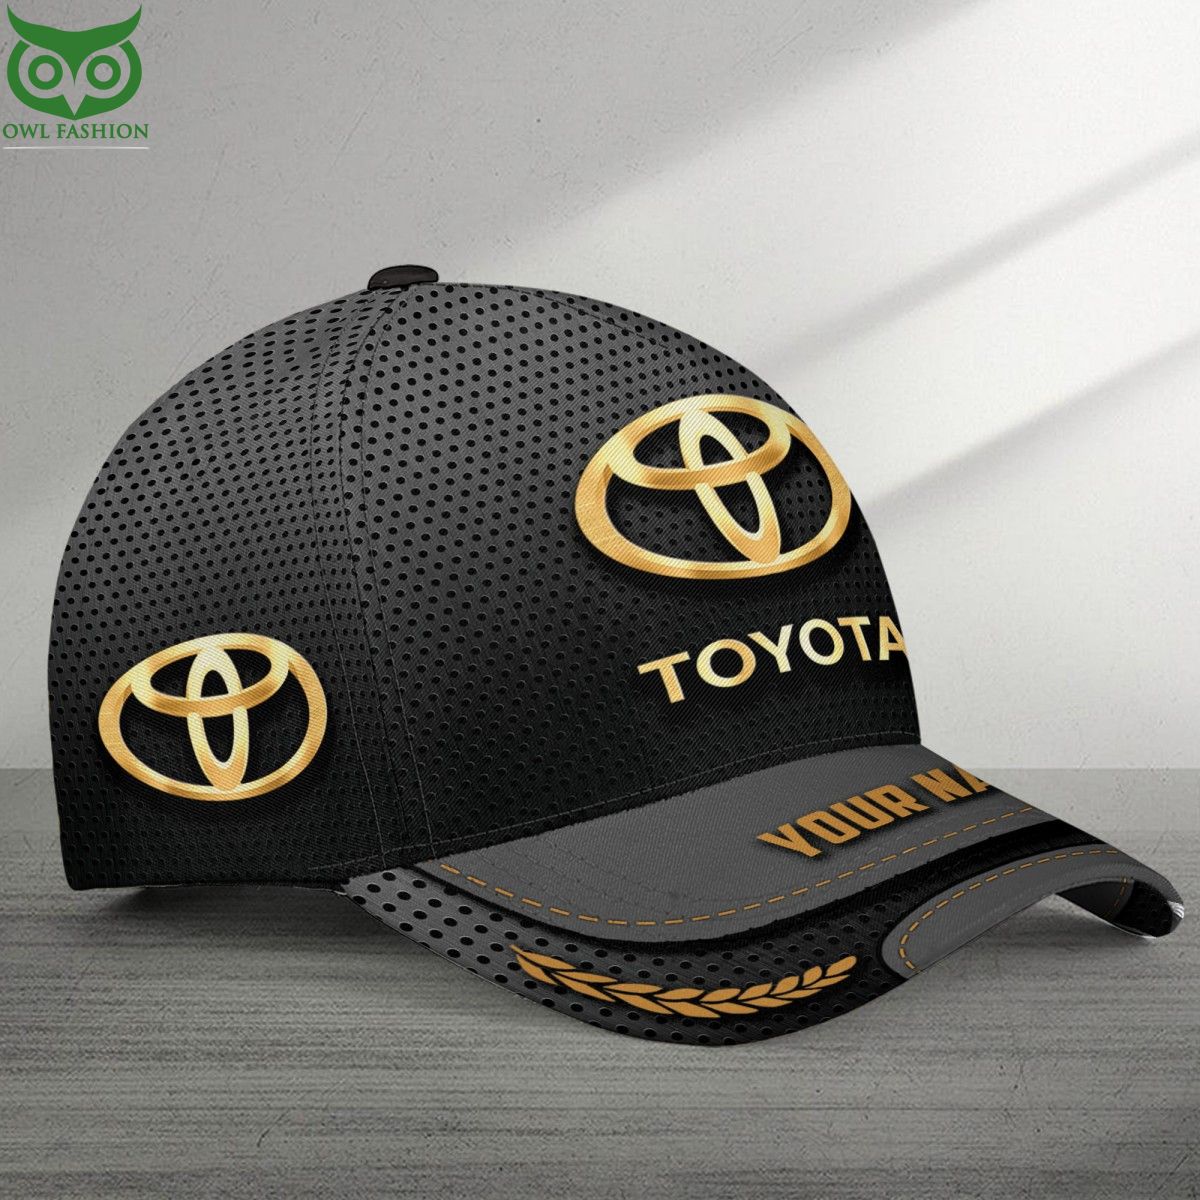 toyota luxury logo brand personalized classic cap 3 sSIKu.jpg